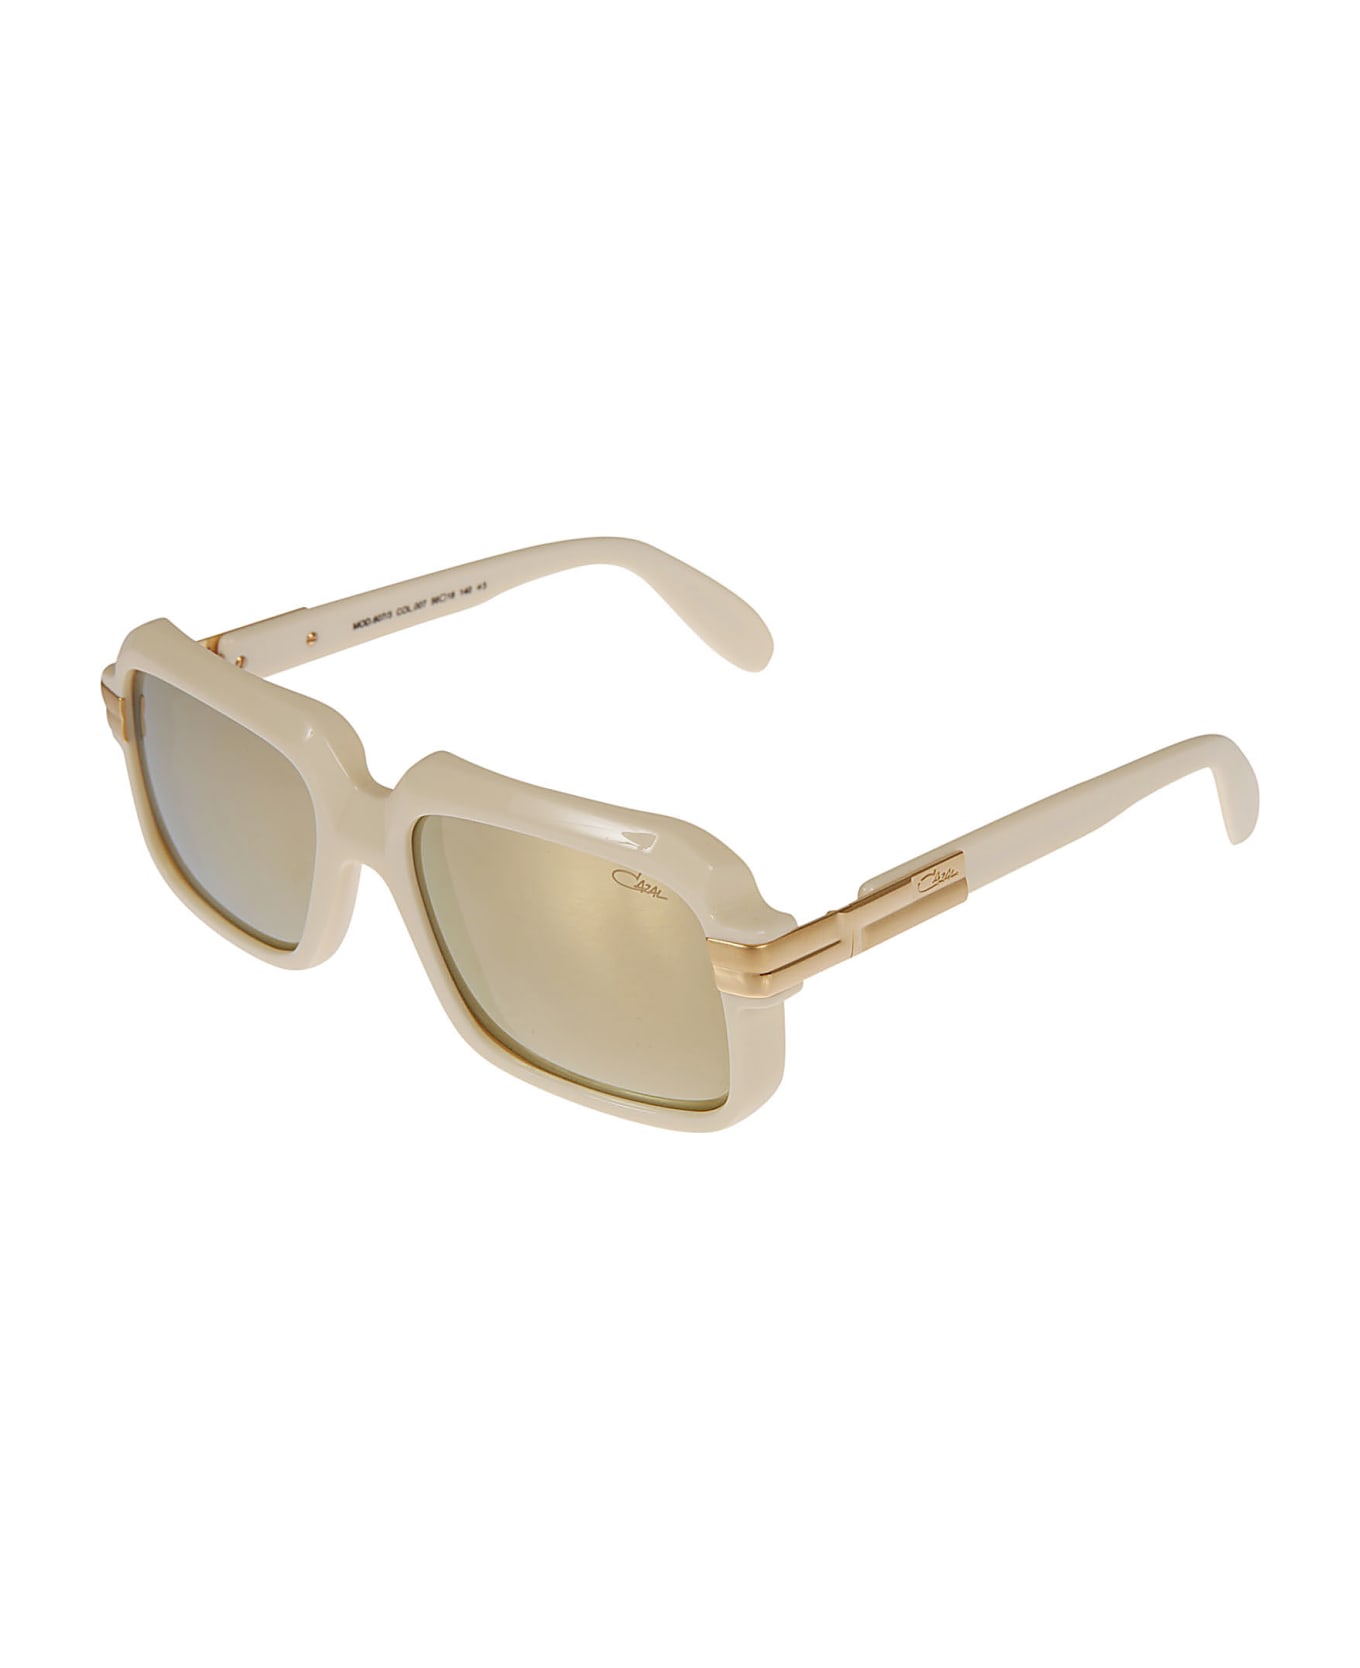 Cazal Classic Square Sunglasses - White